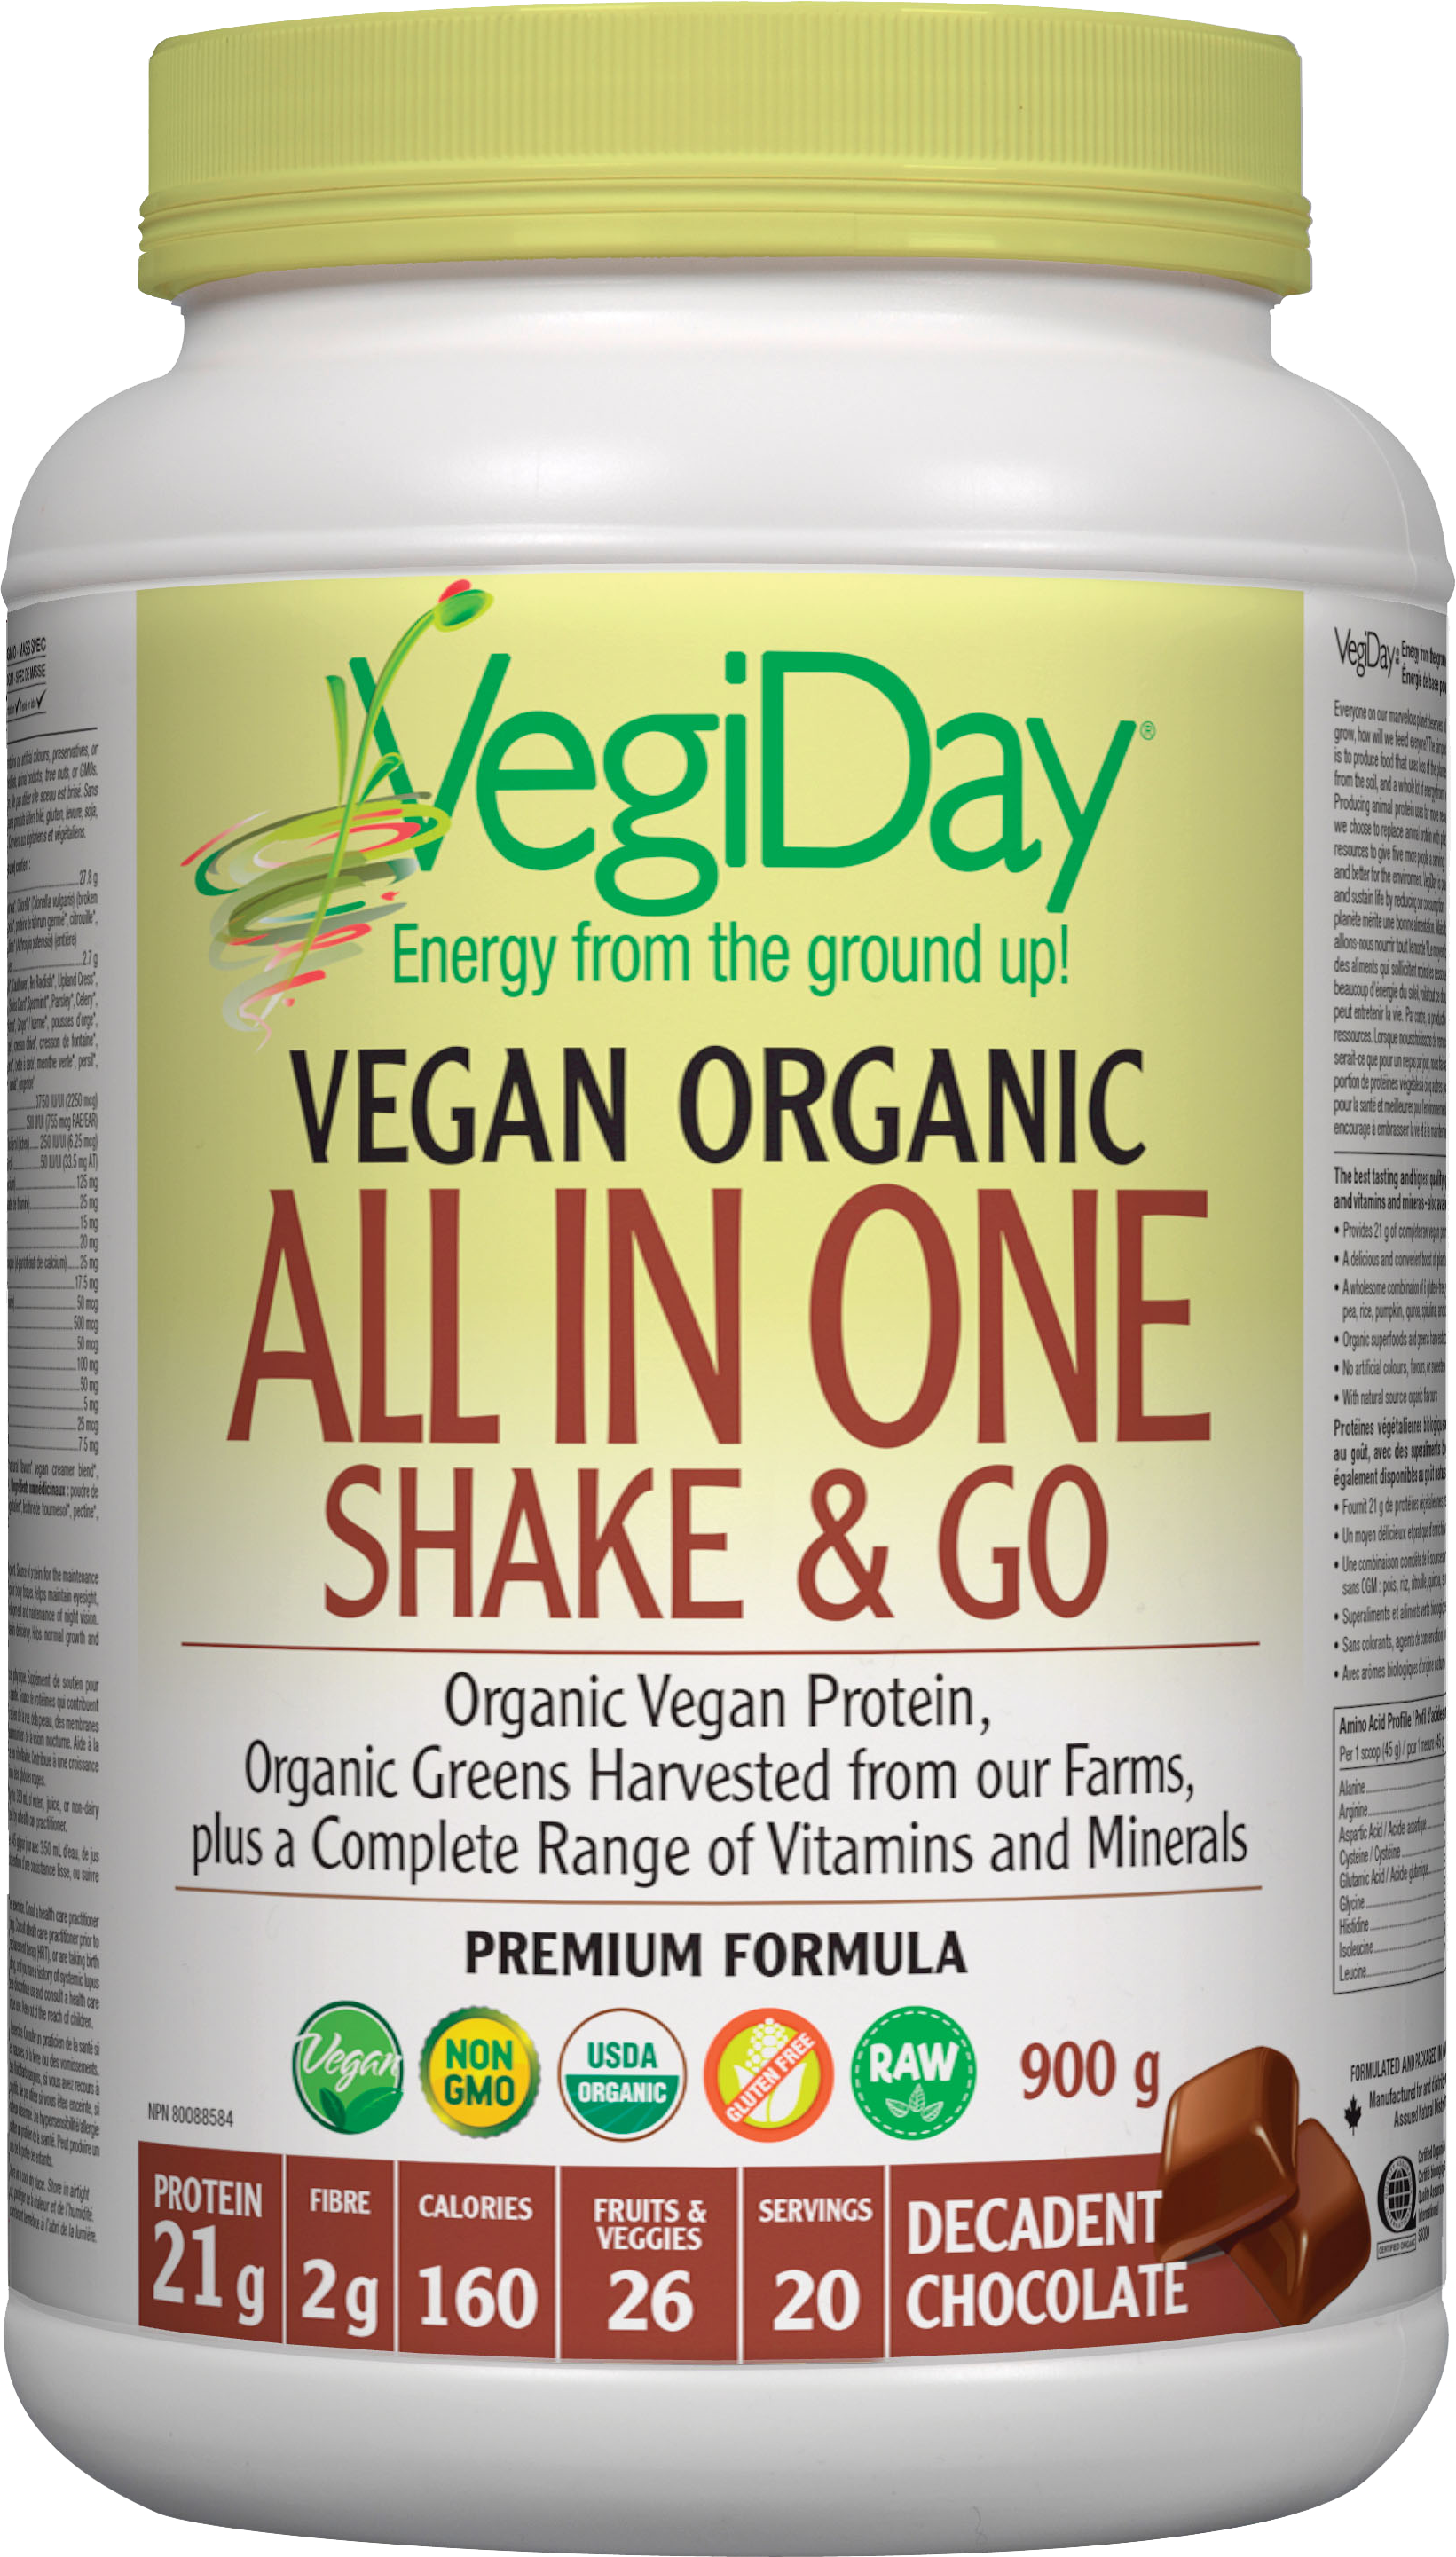 VegiDay Vegan Organic All In One Shake & Go Decadent Chocolate 900g